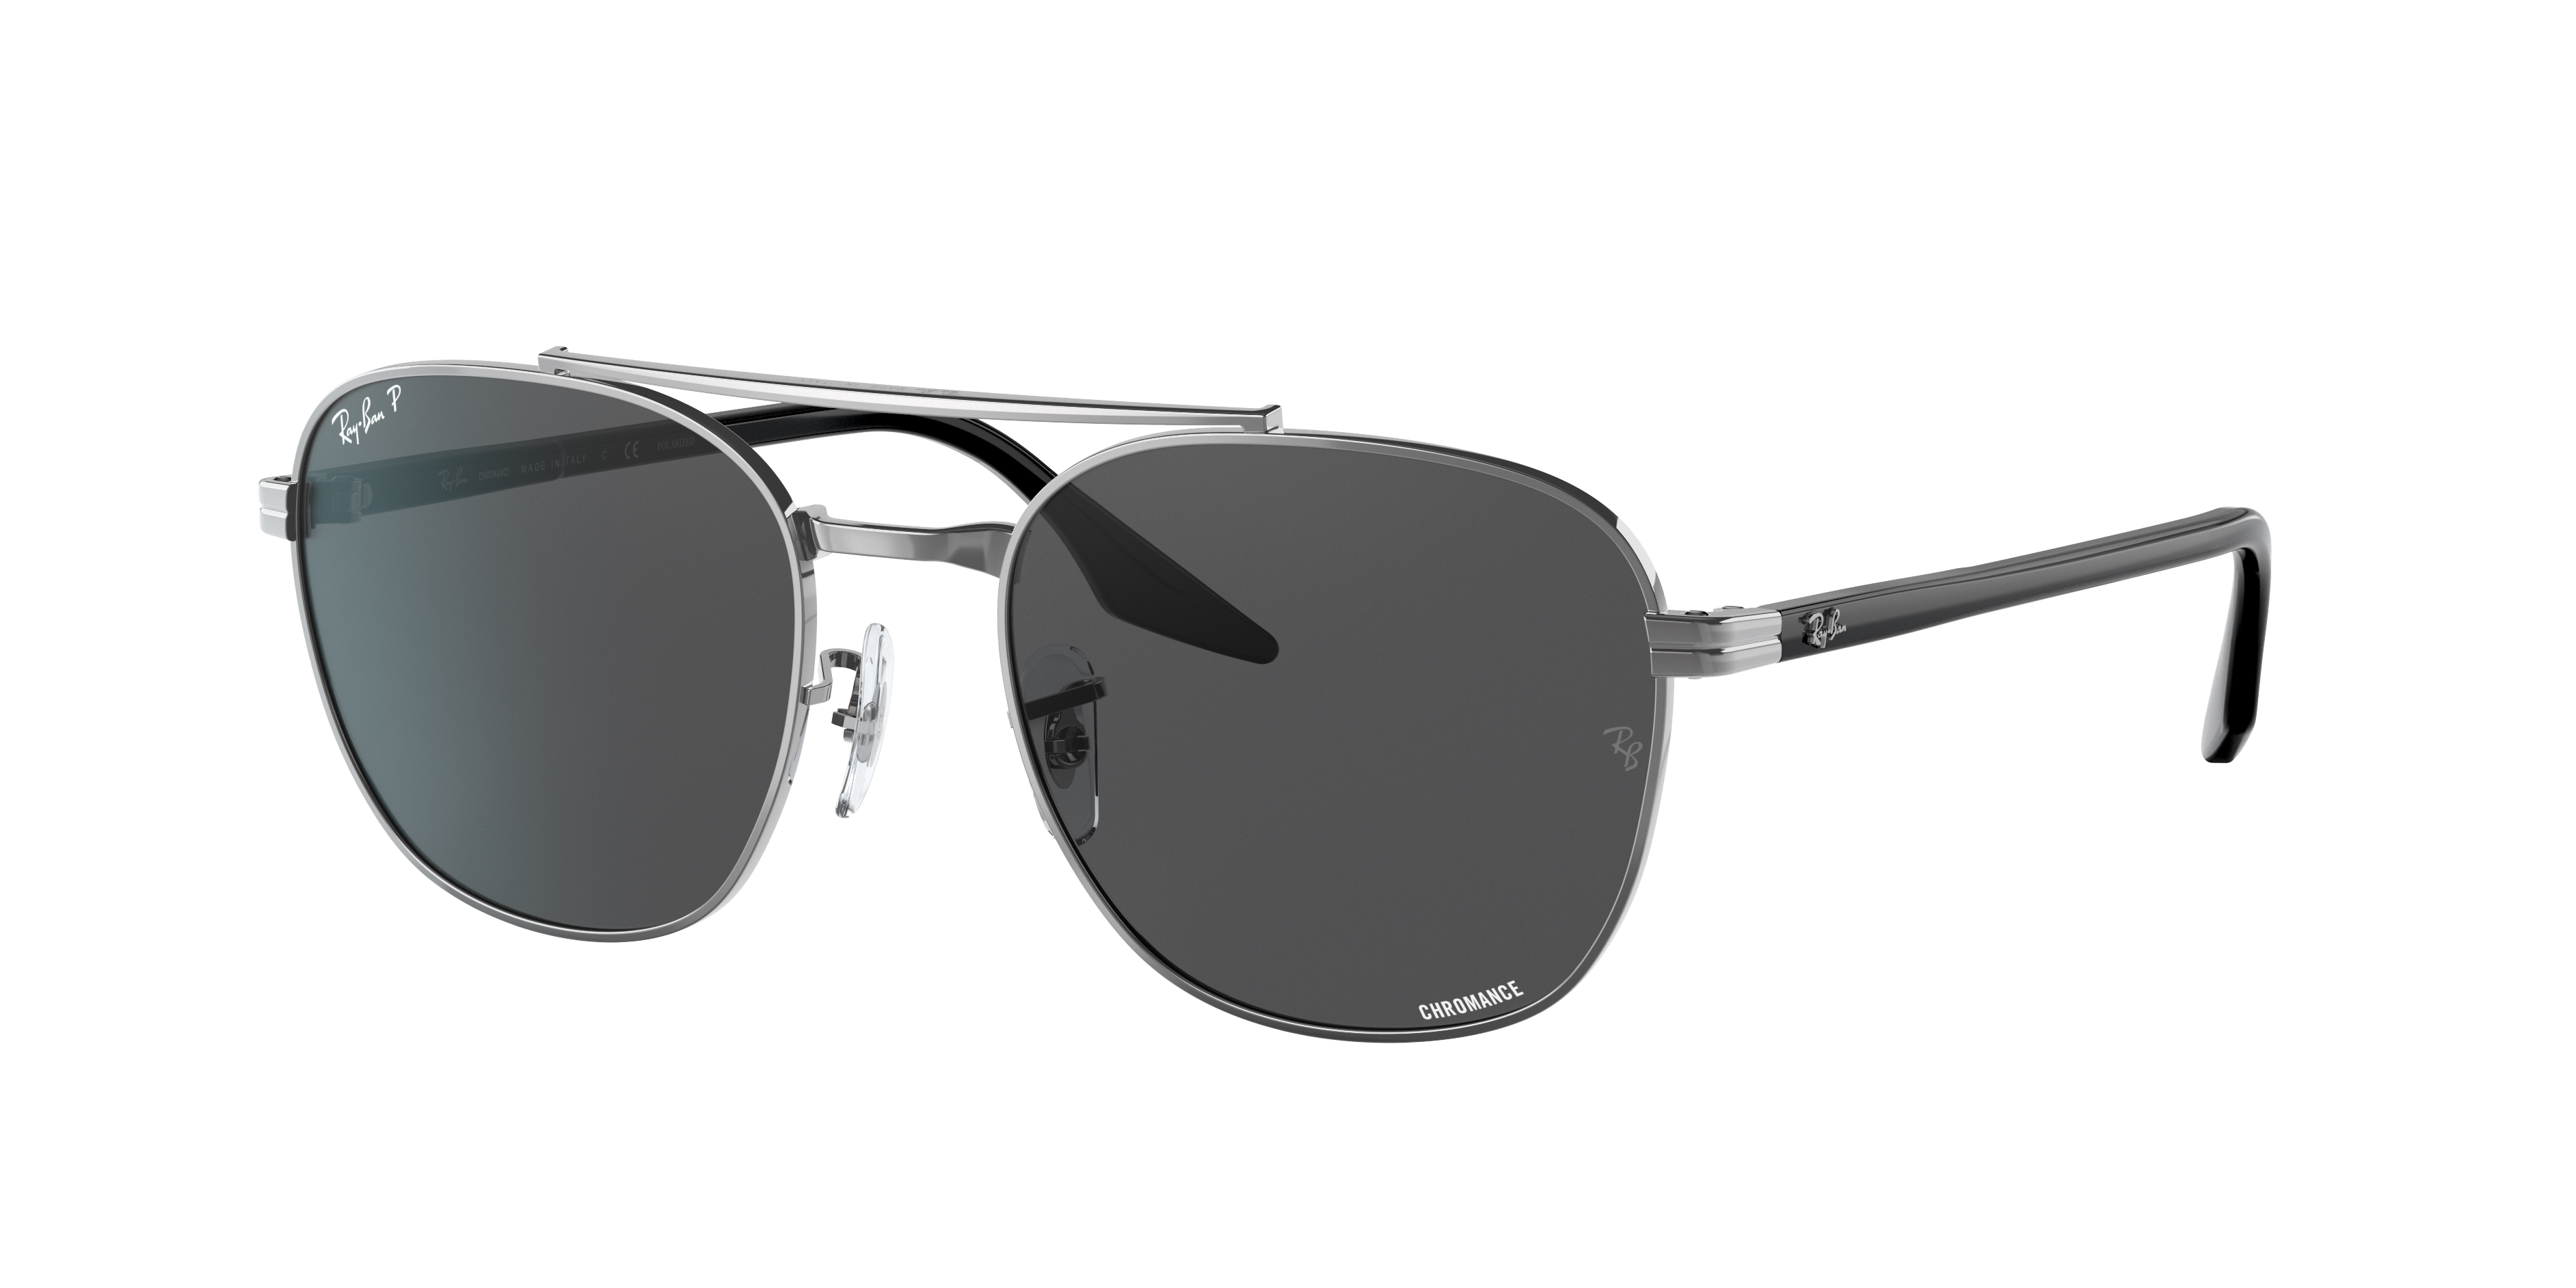 Rb3688 Chromance Sunglasses in Gunmetal and Dark Grey | Ray-Ban®